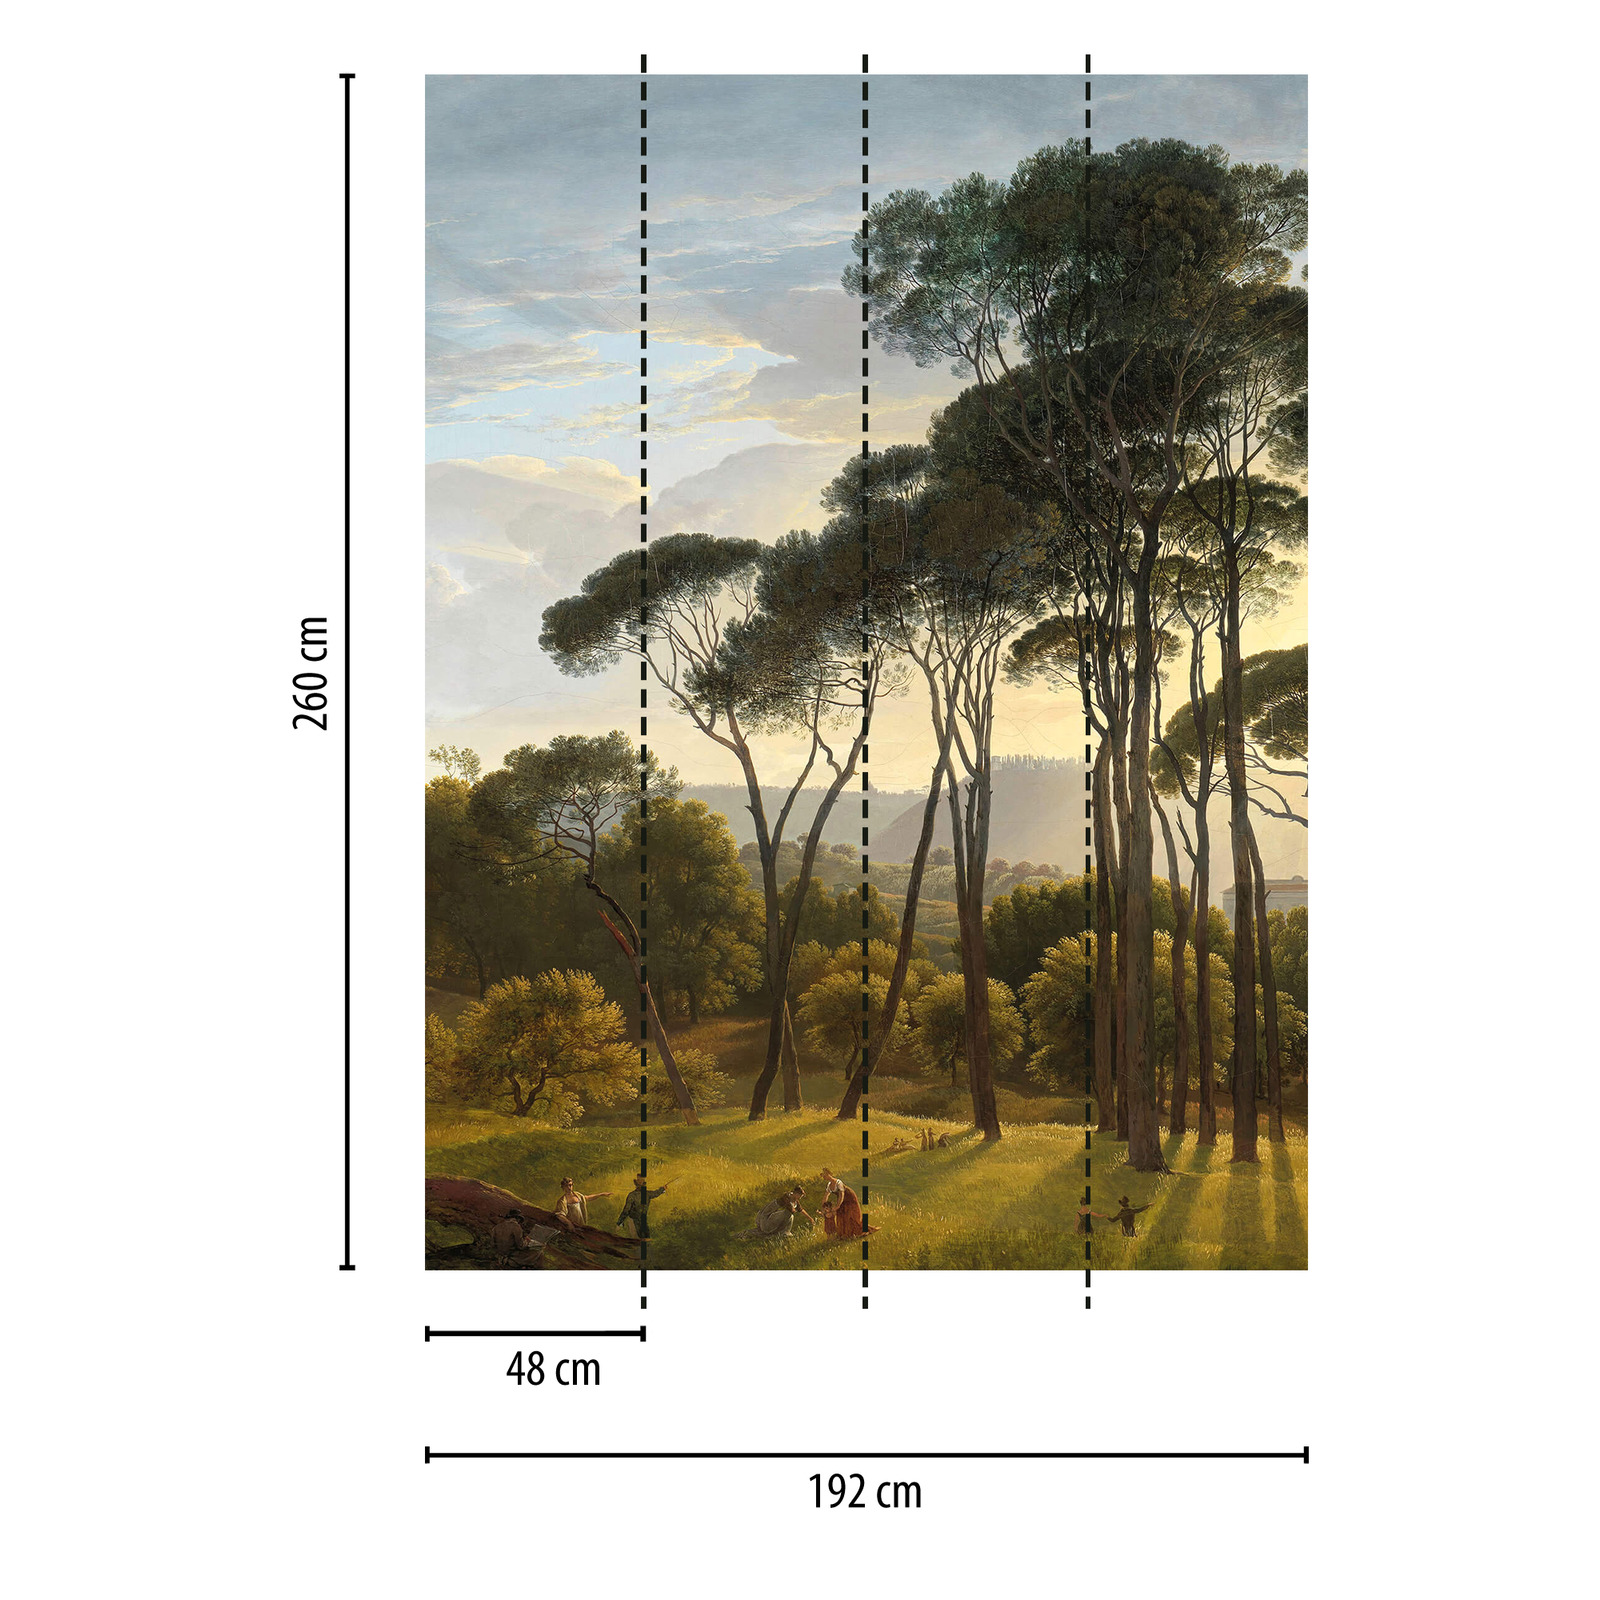             Fototapete Landschaft mit Bäumen – Grün, Braun, Grau
        